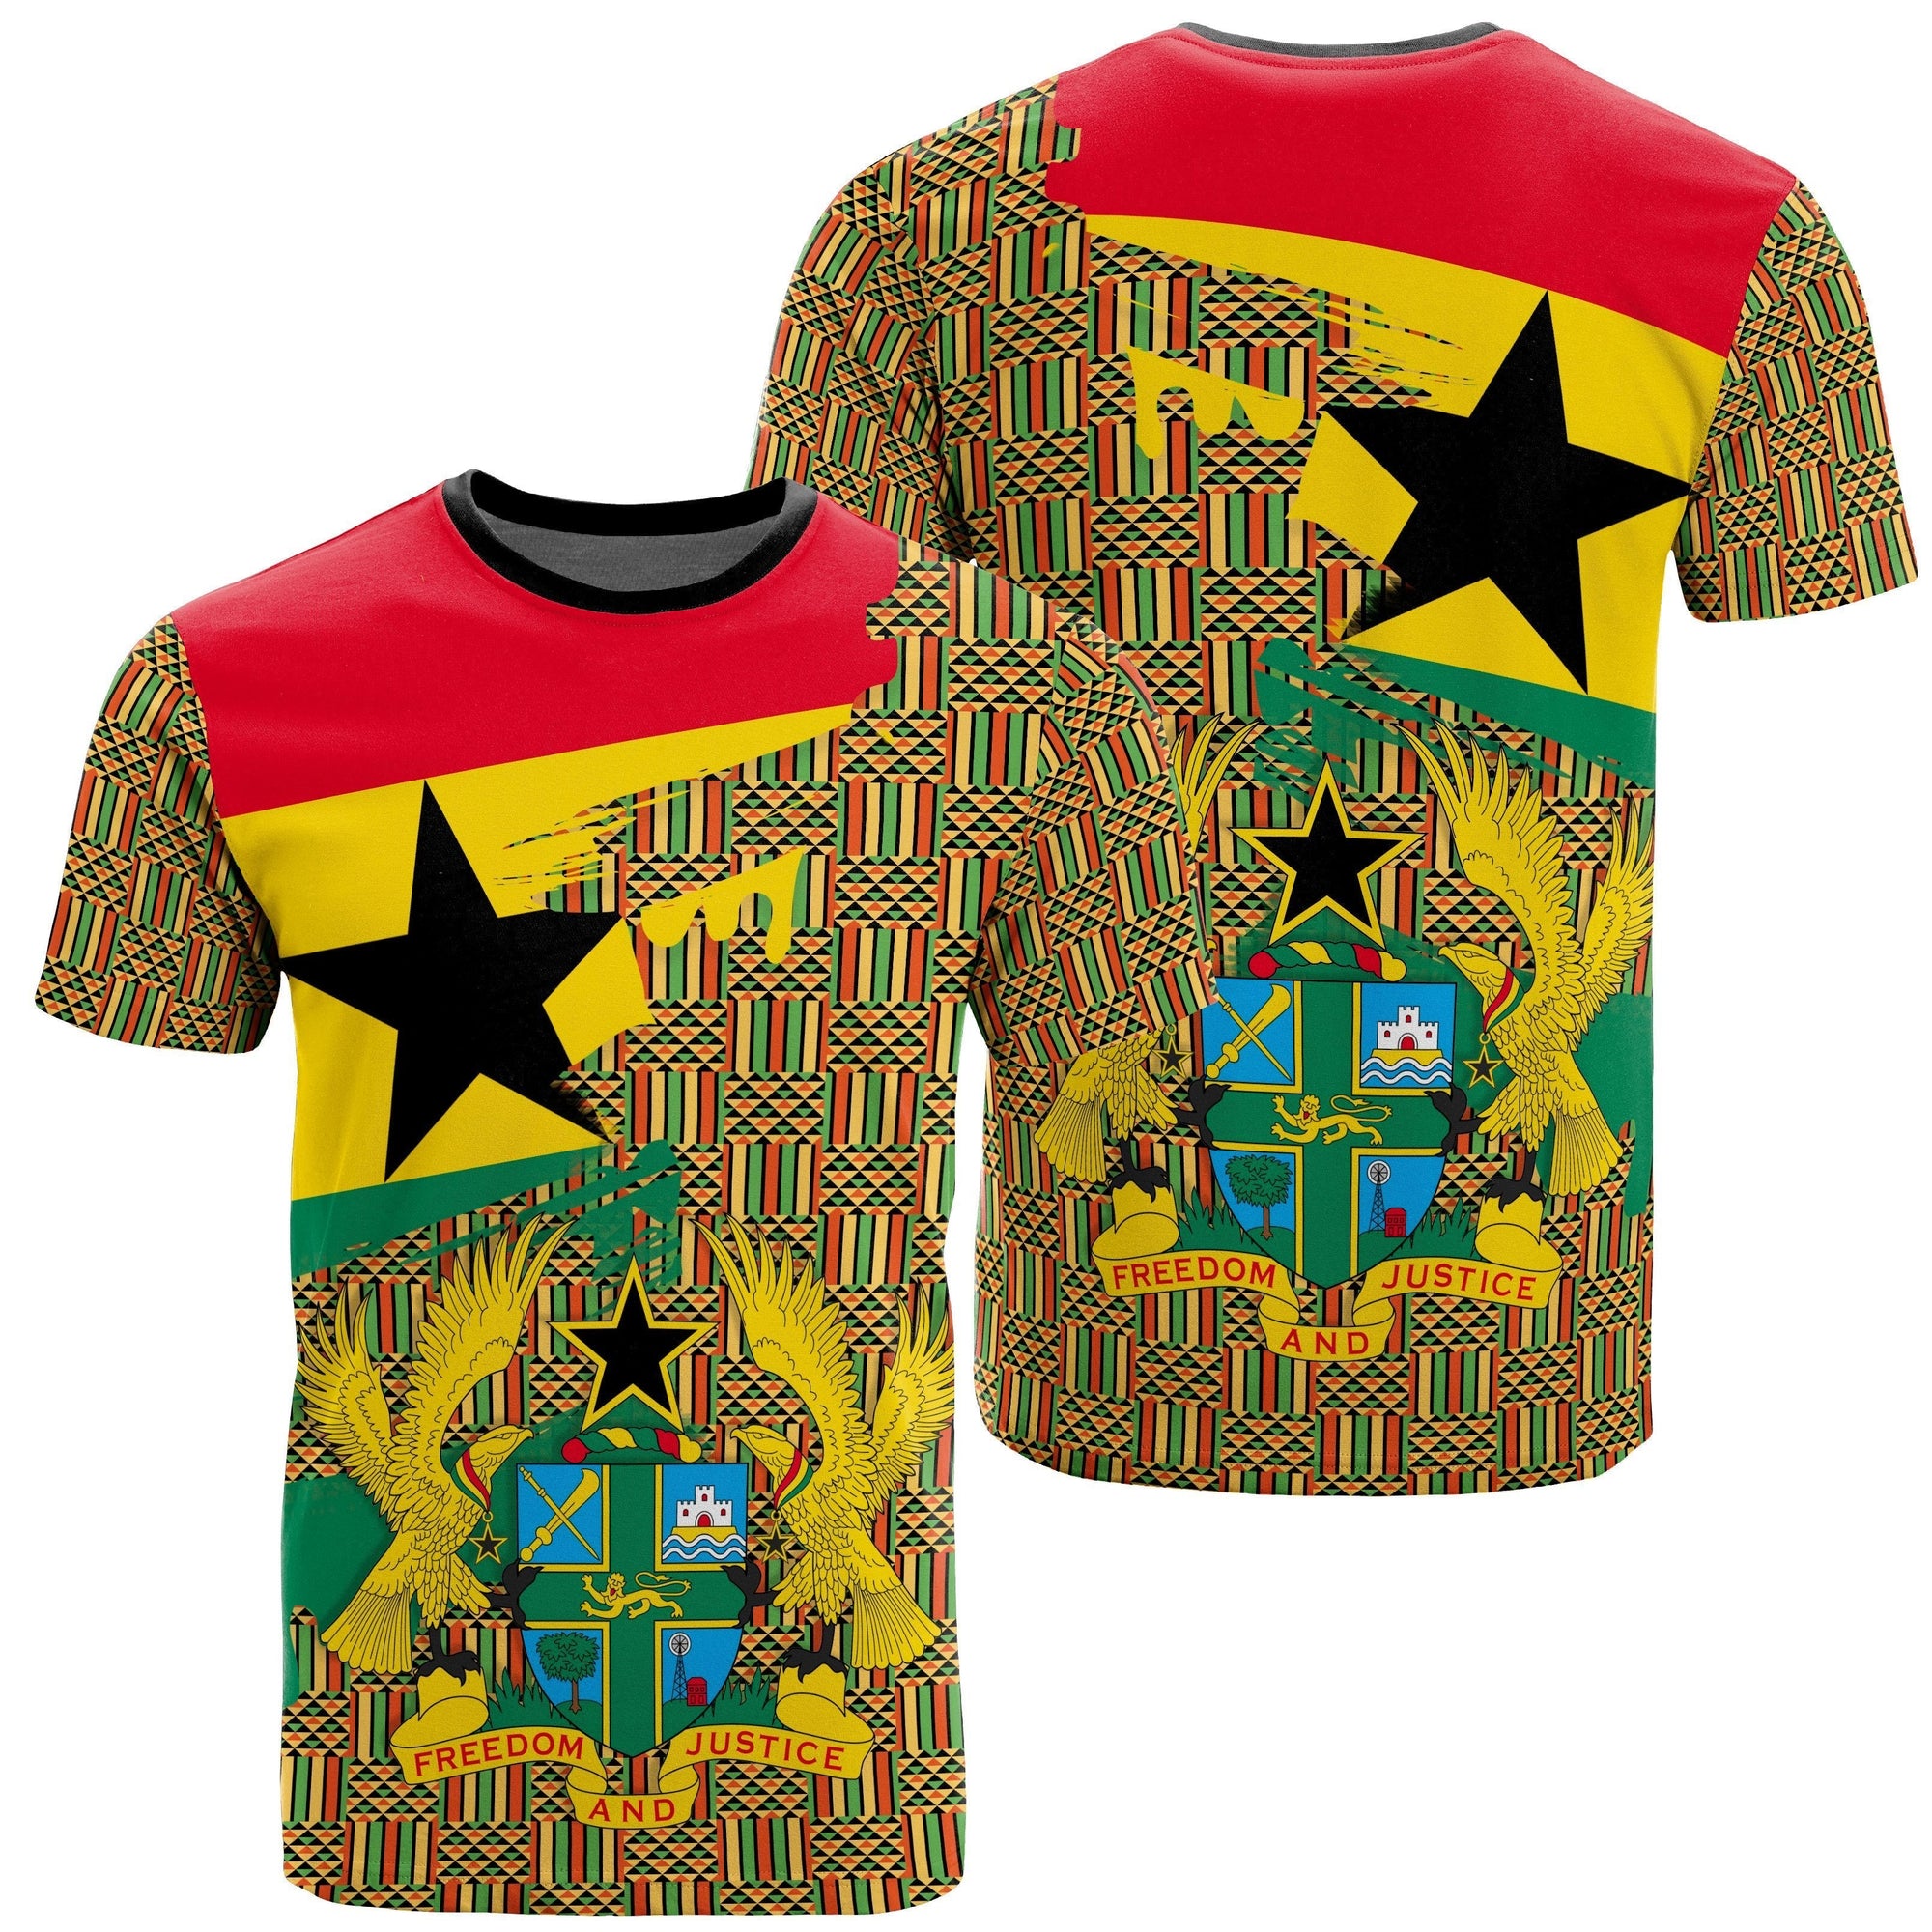 wonder-print-shop-t-shirt-kente-fabric-kwanzaa-tee-gash-style